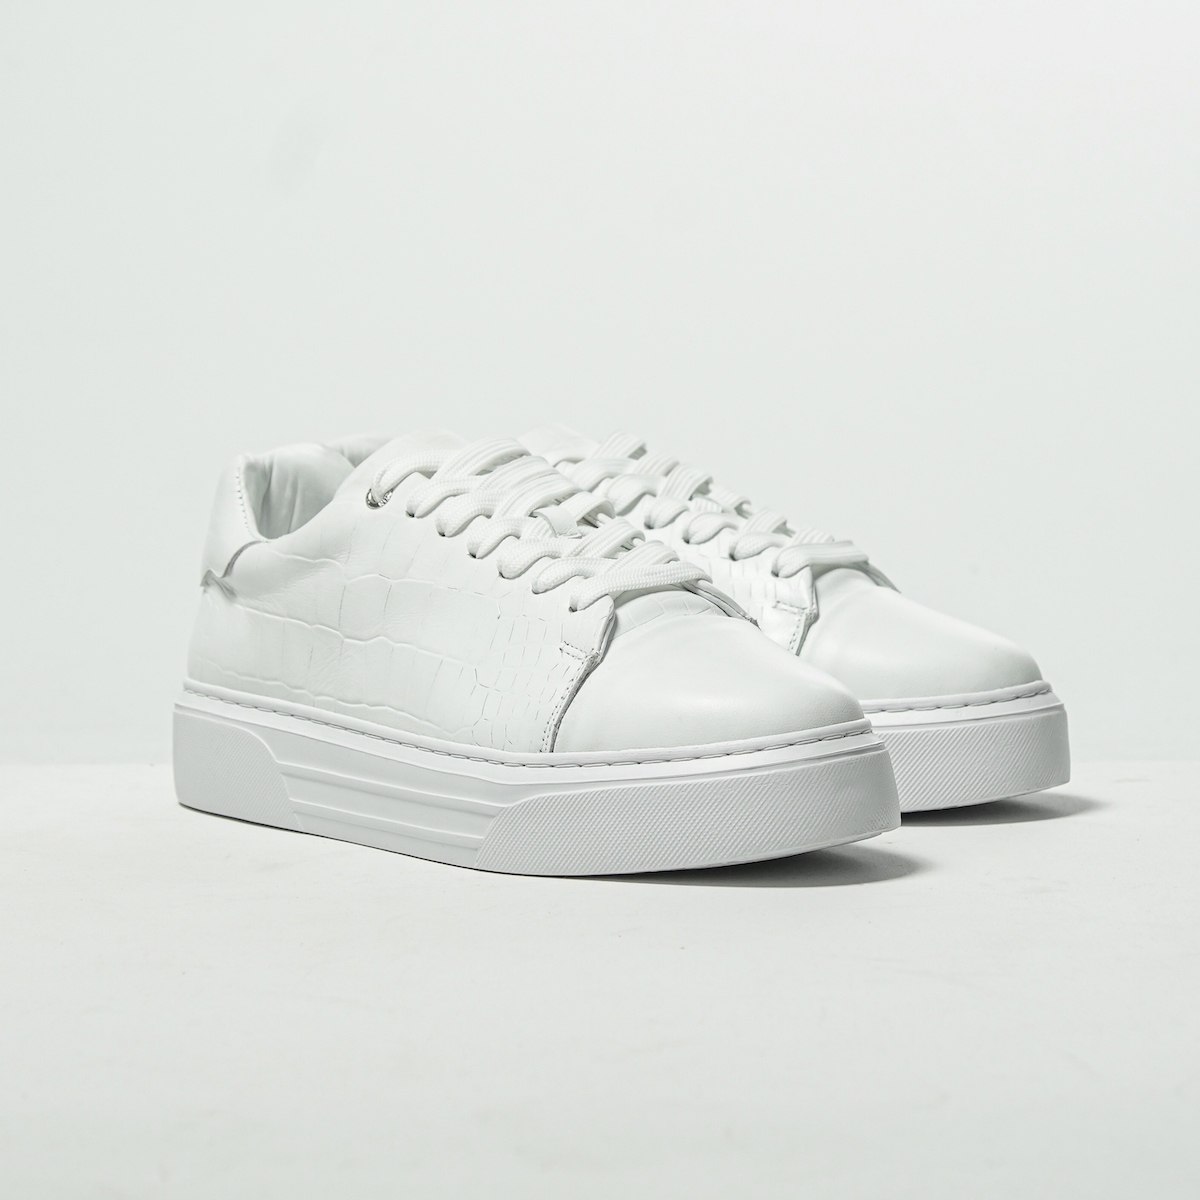 Rizz Lizz Genuine Leather Sneakers Shoes in White | Martin Valen